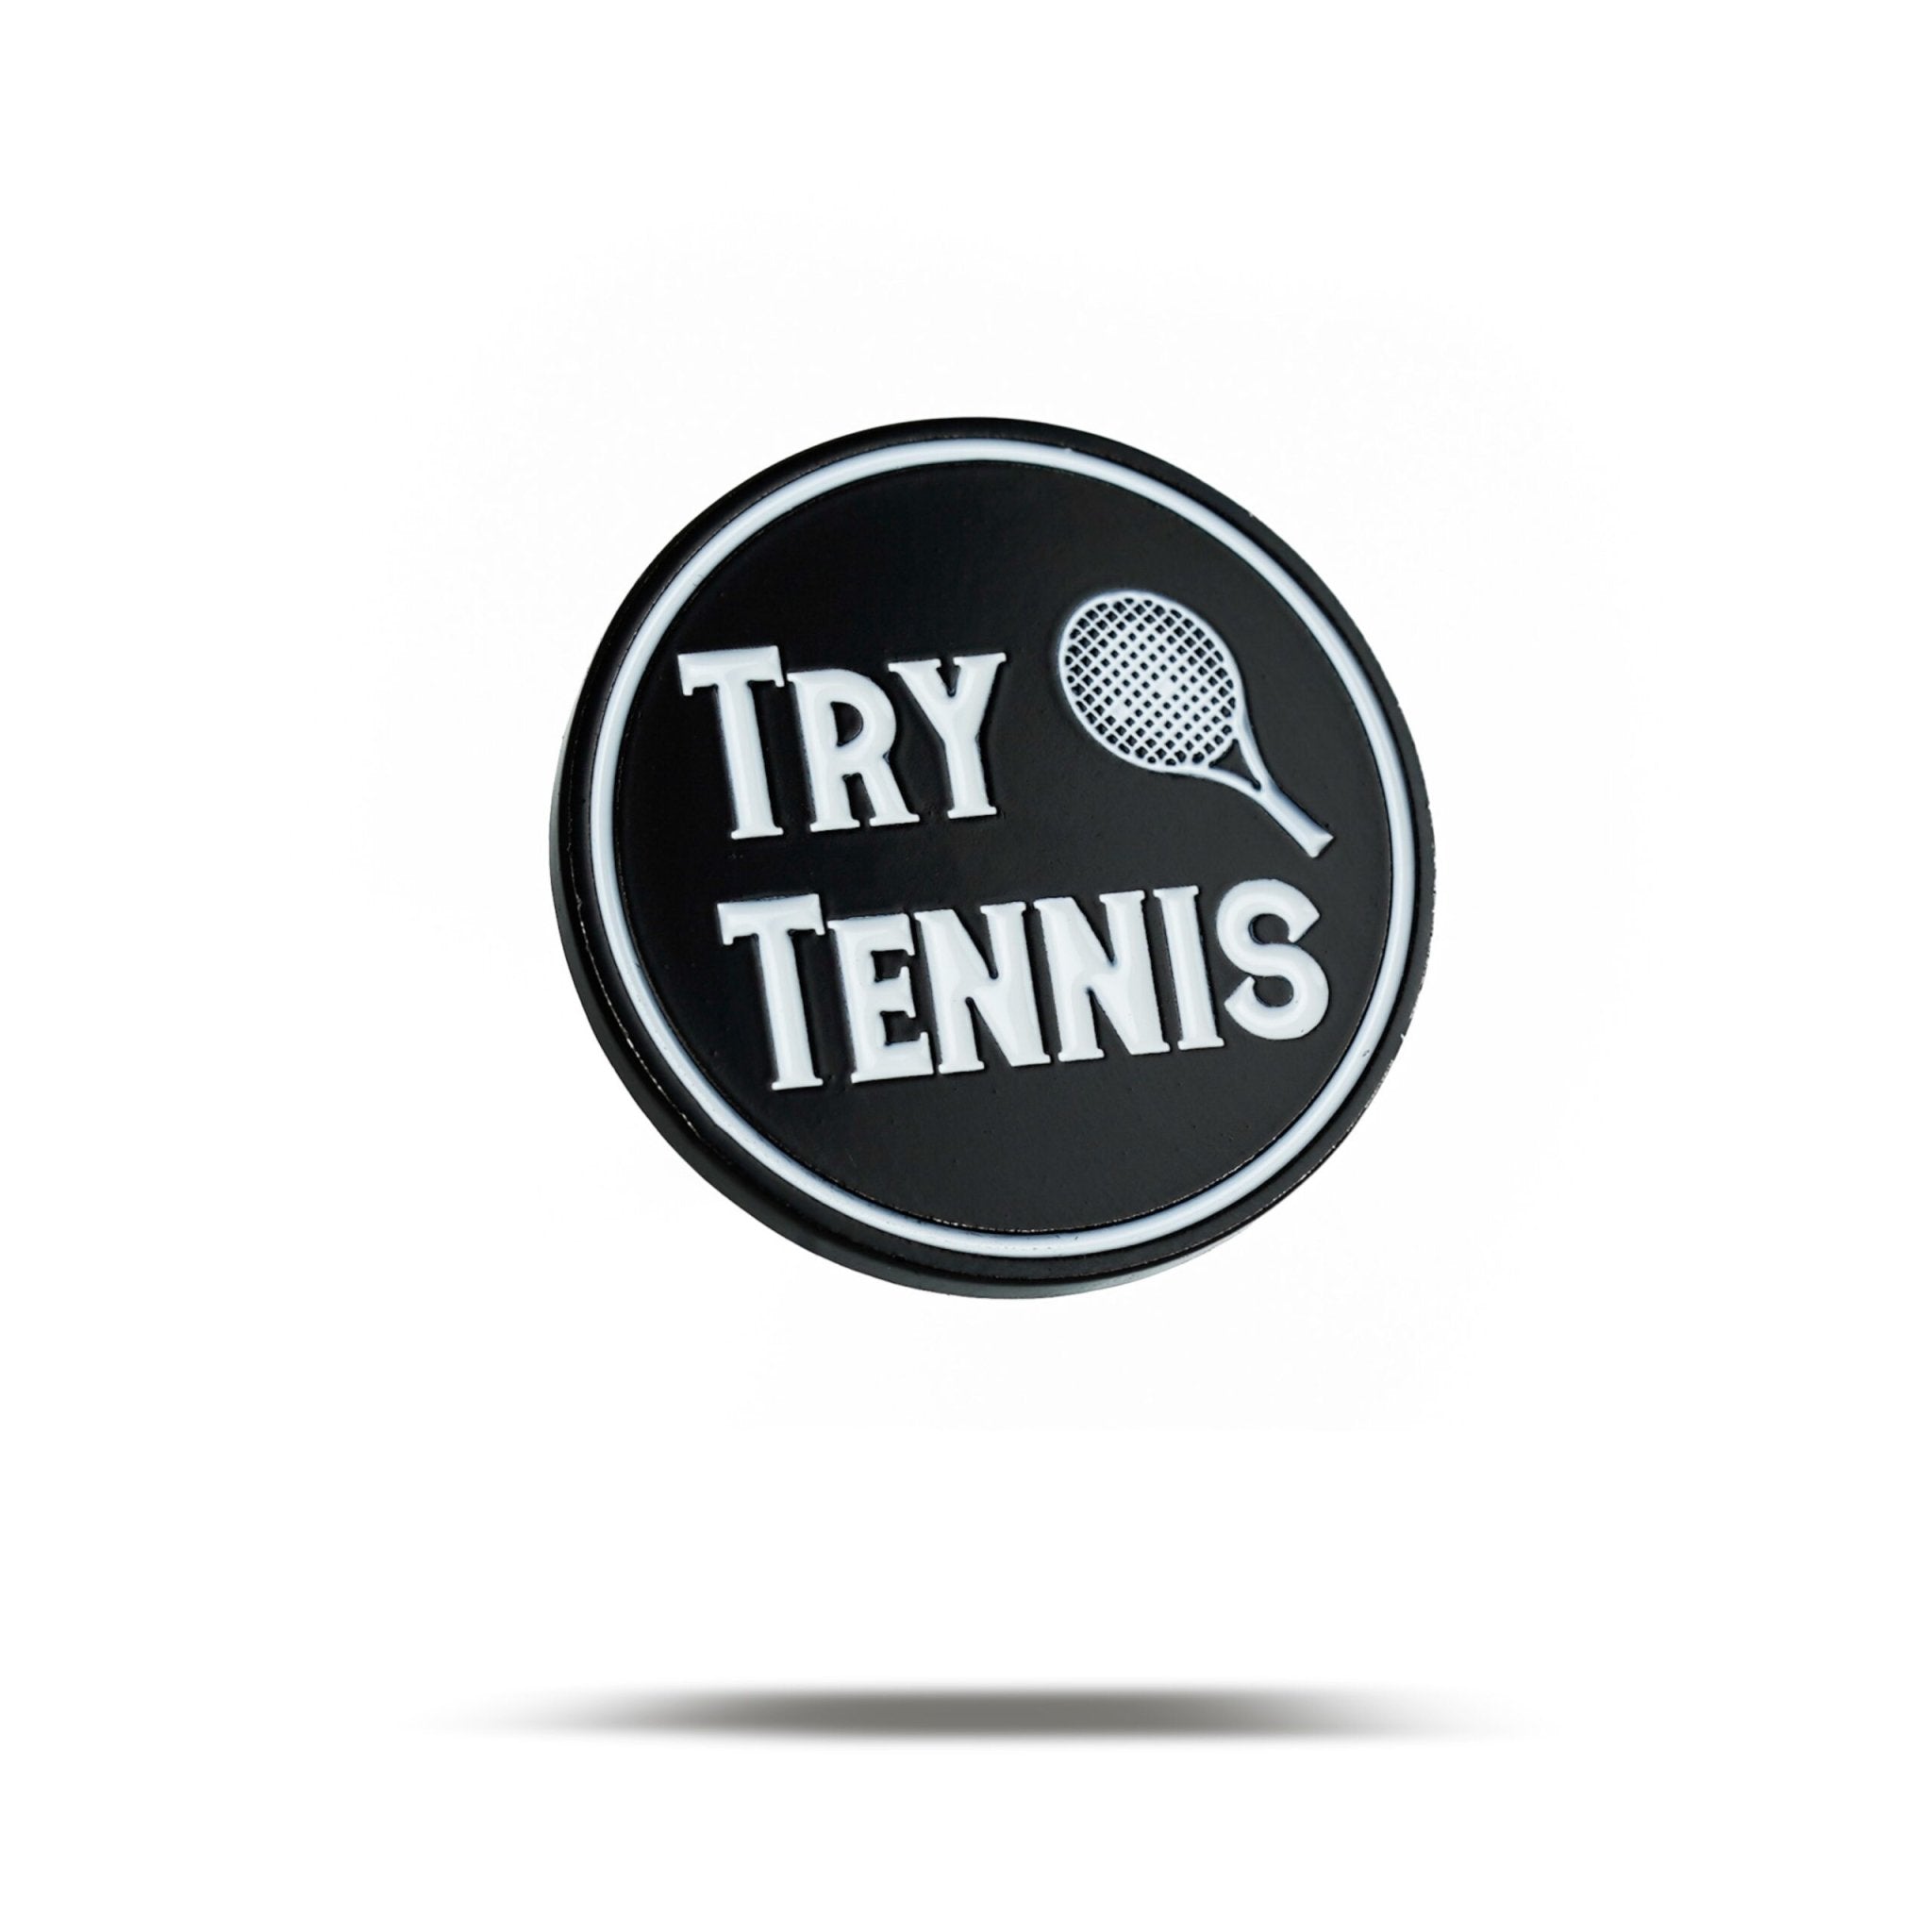 Try Tennis - Ball Marker - bogeybros-new